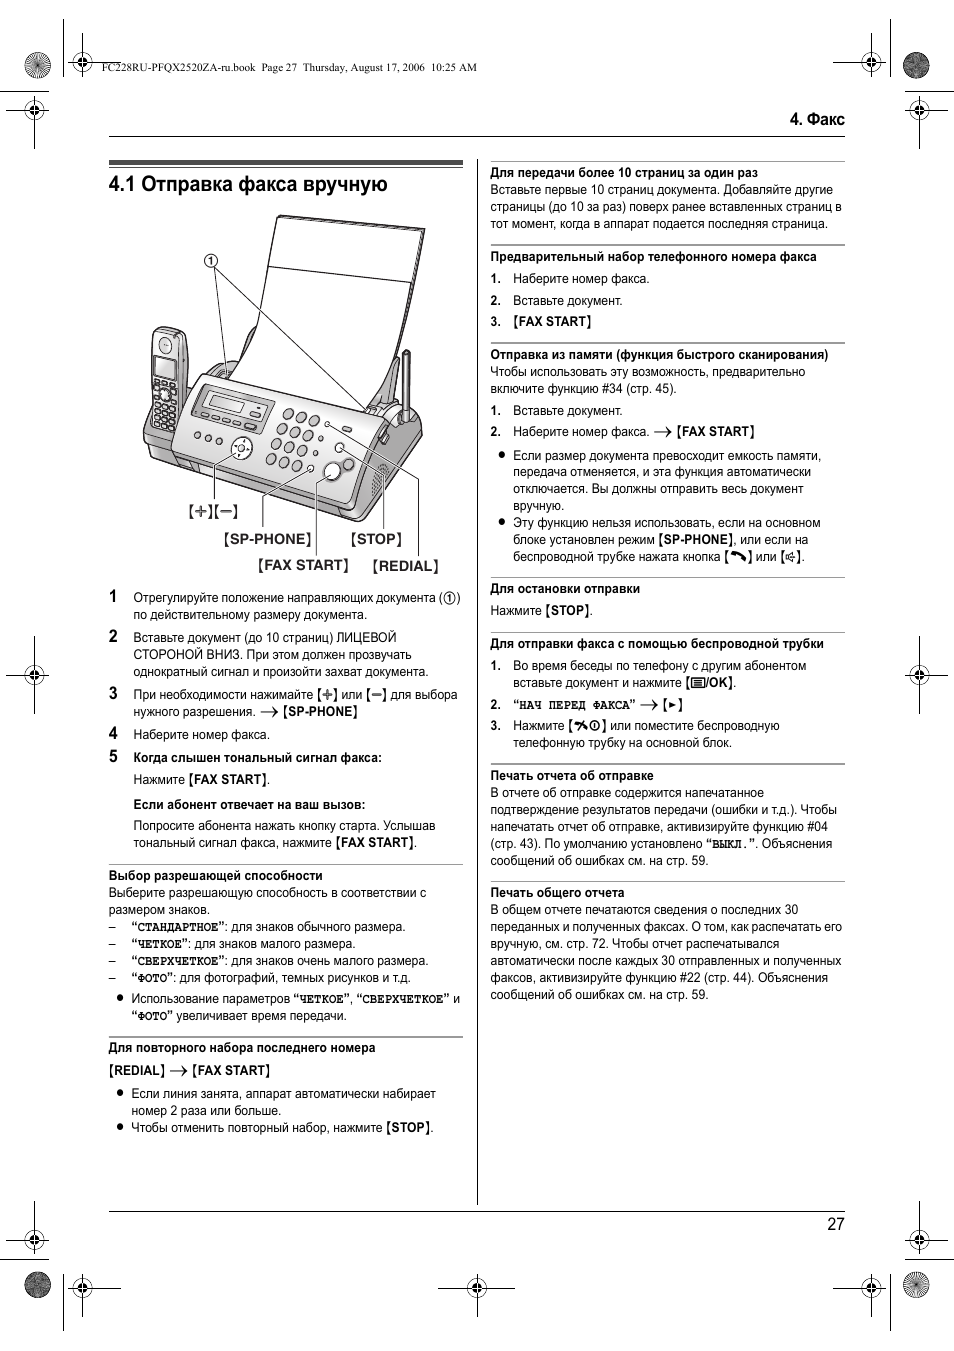 Инструкция отправки факса